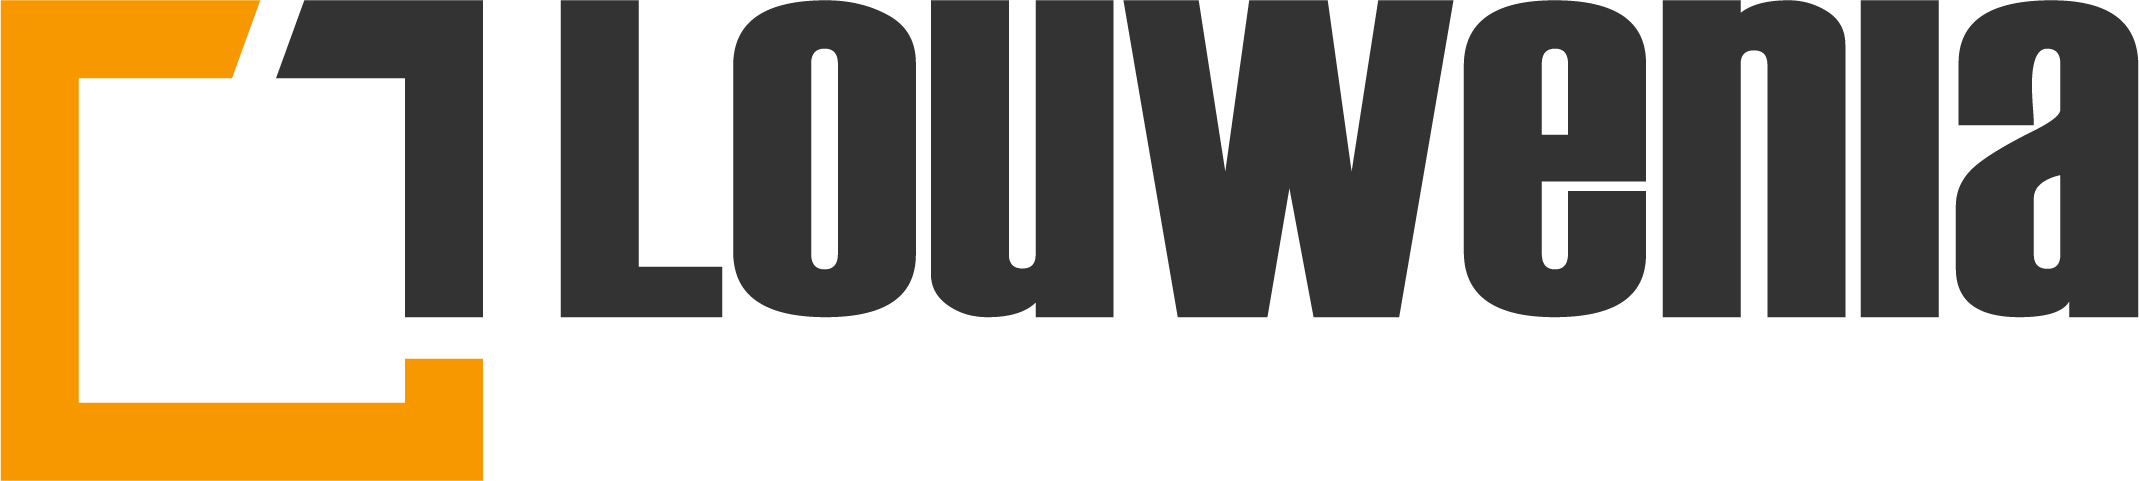 Louwenia Logo gross